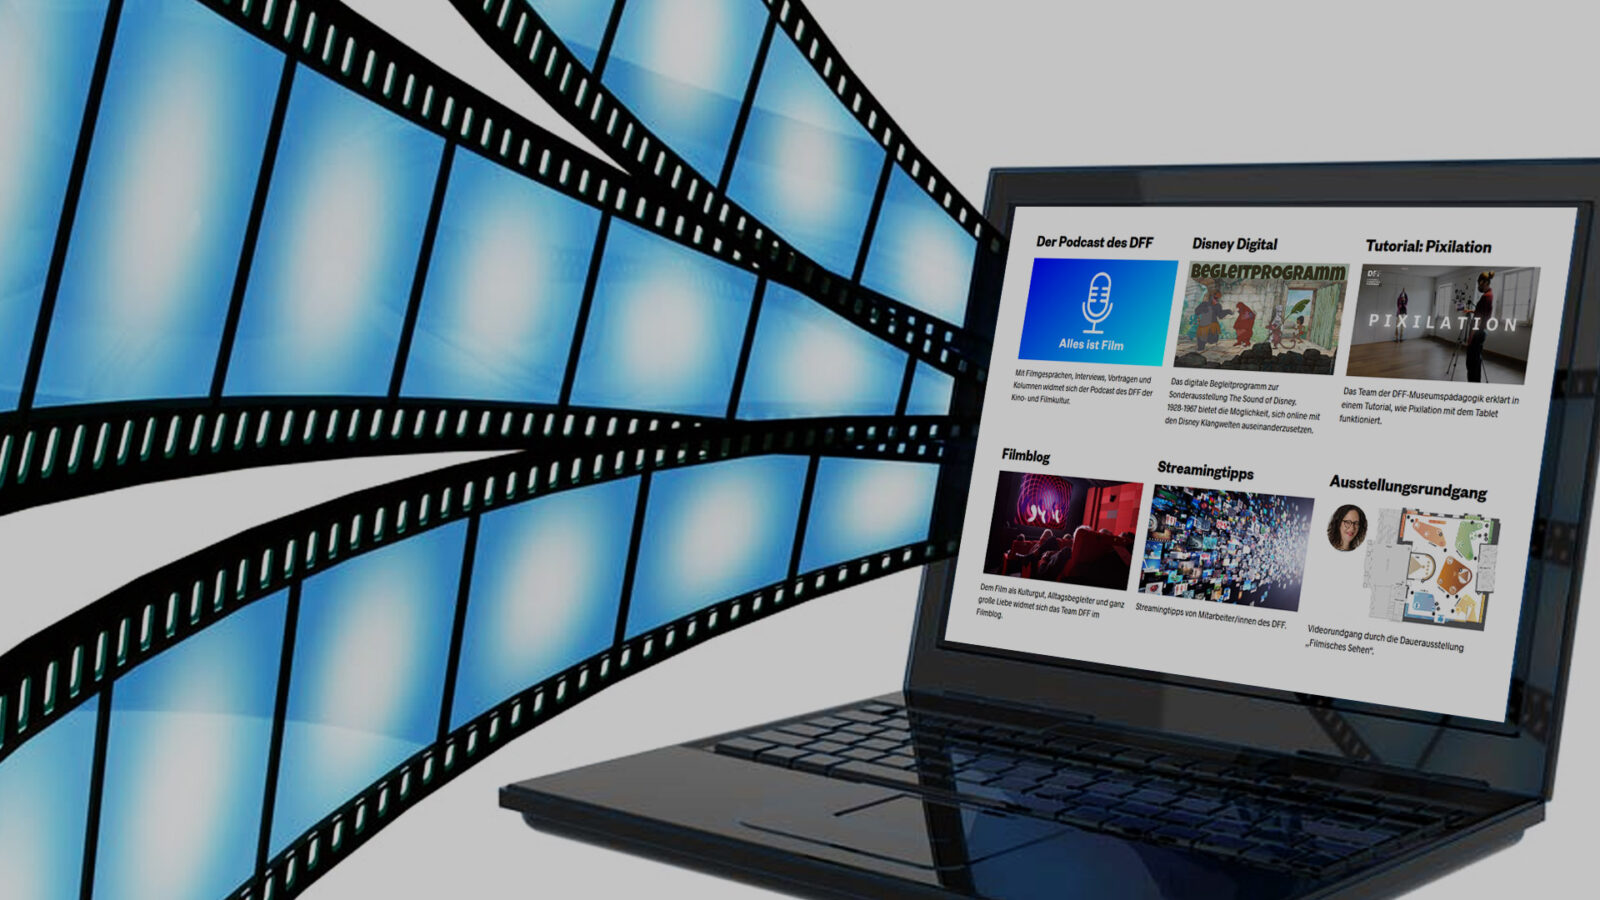 Film Culture Online: Digital Offerings by DFF